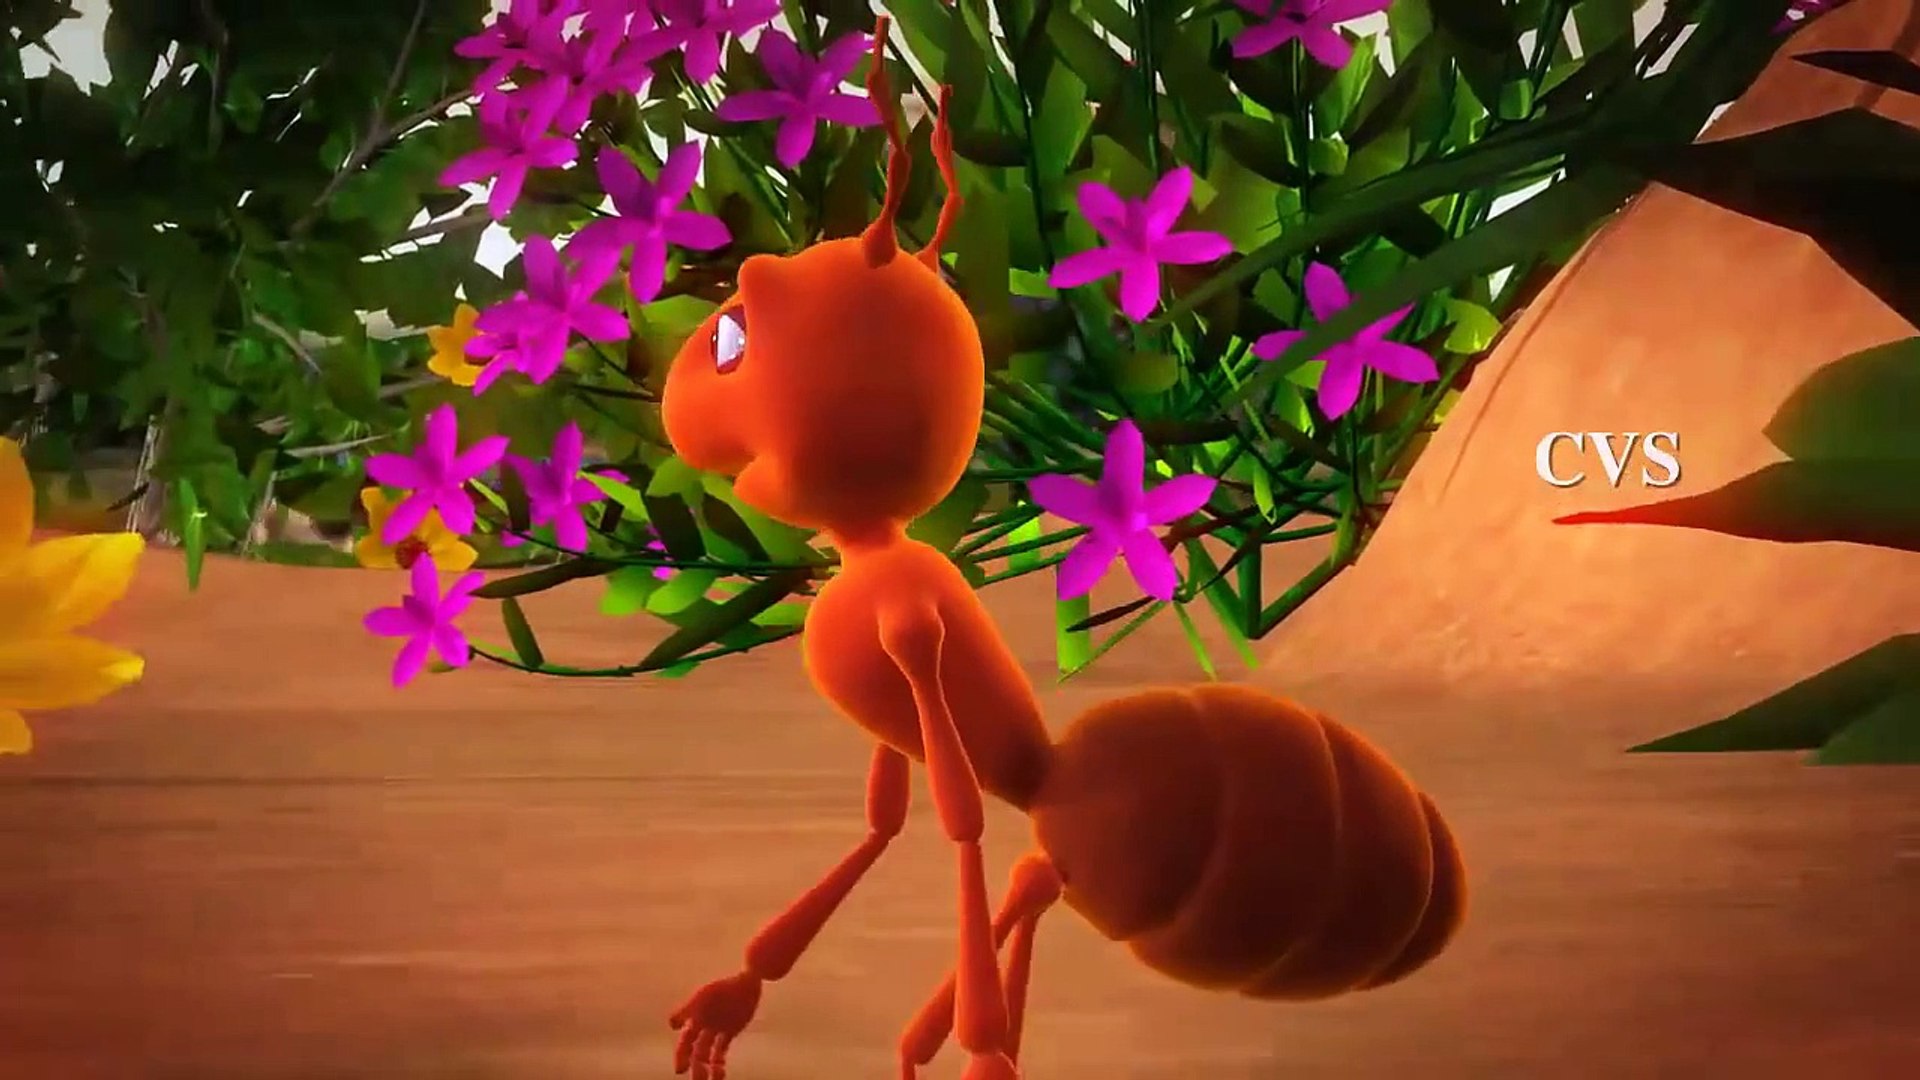 Cheema entho chinnadi Ants 3D Animation Telugu Rhymes For Children with  Lyrics - Dailymotion Video